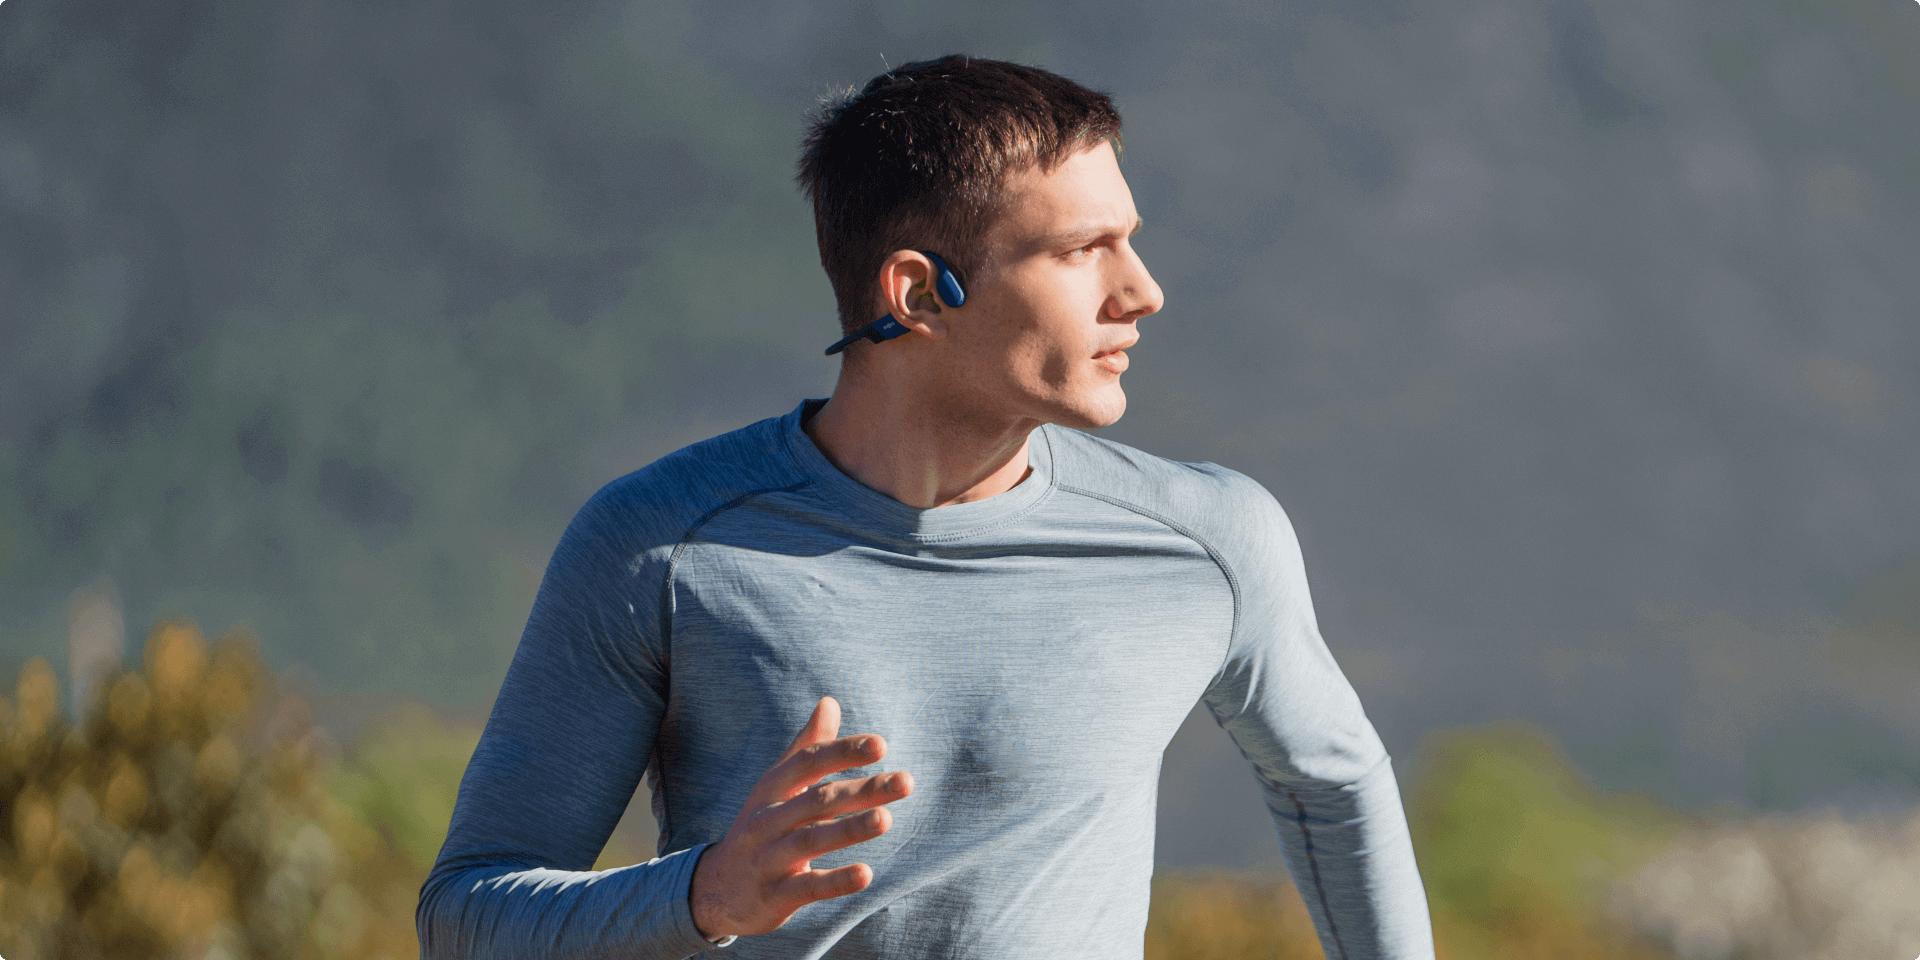 9th generation bone conduction premium bluetooth headphones